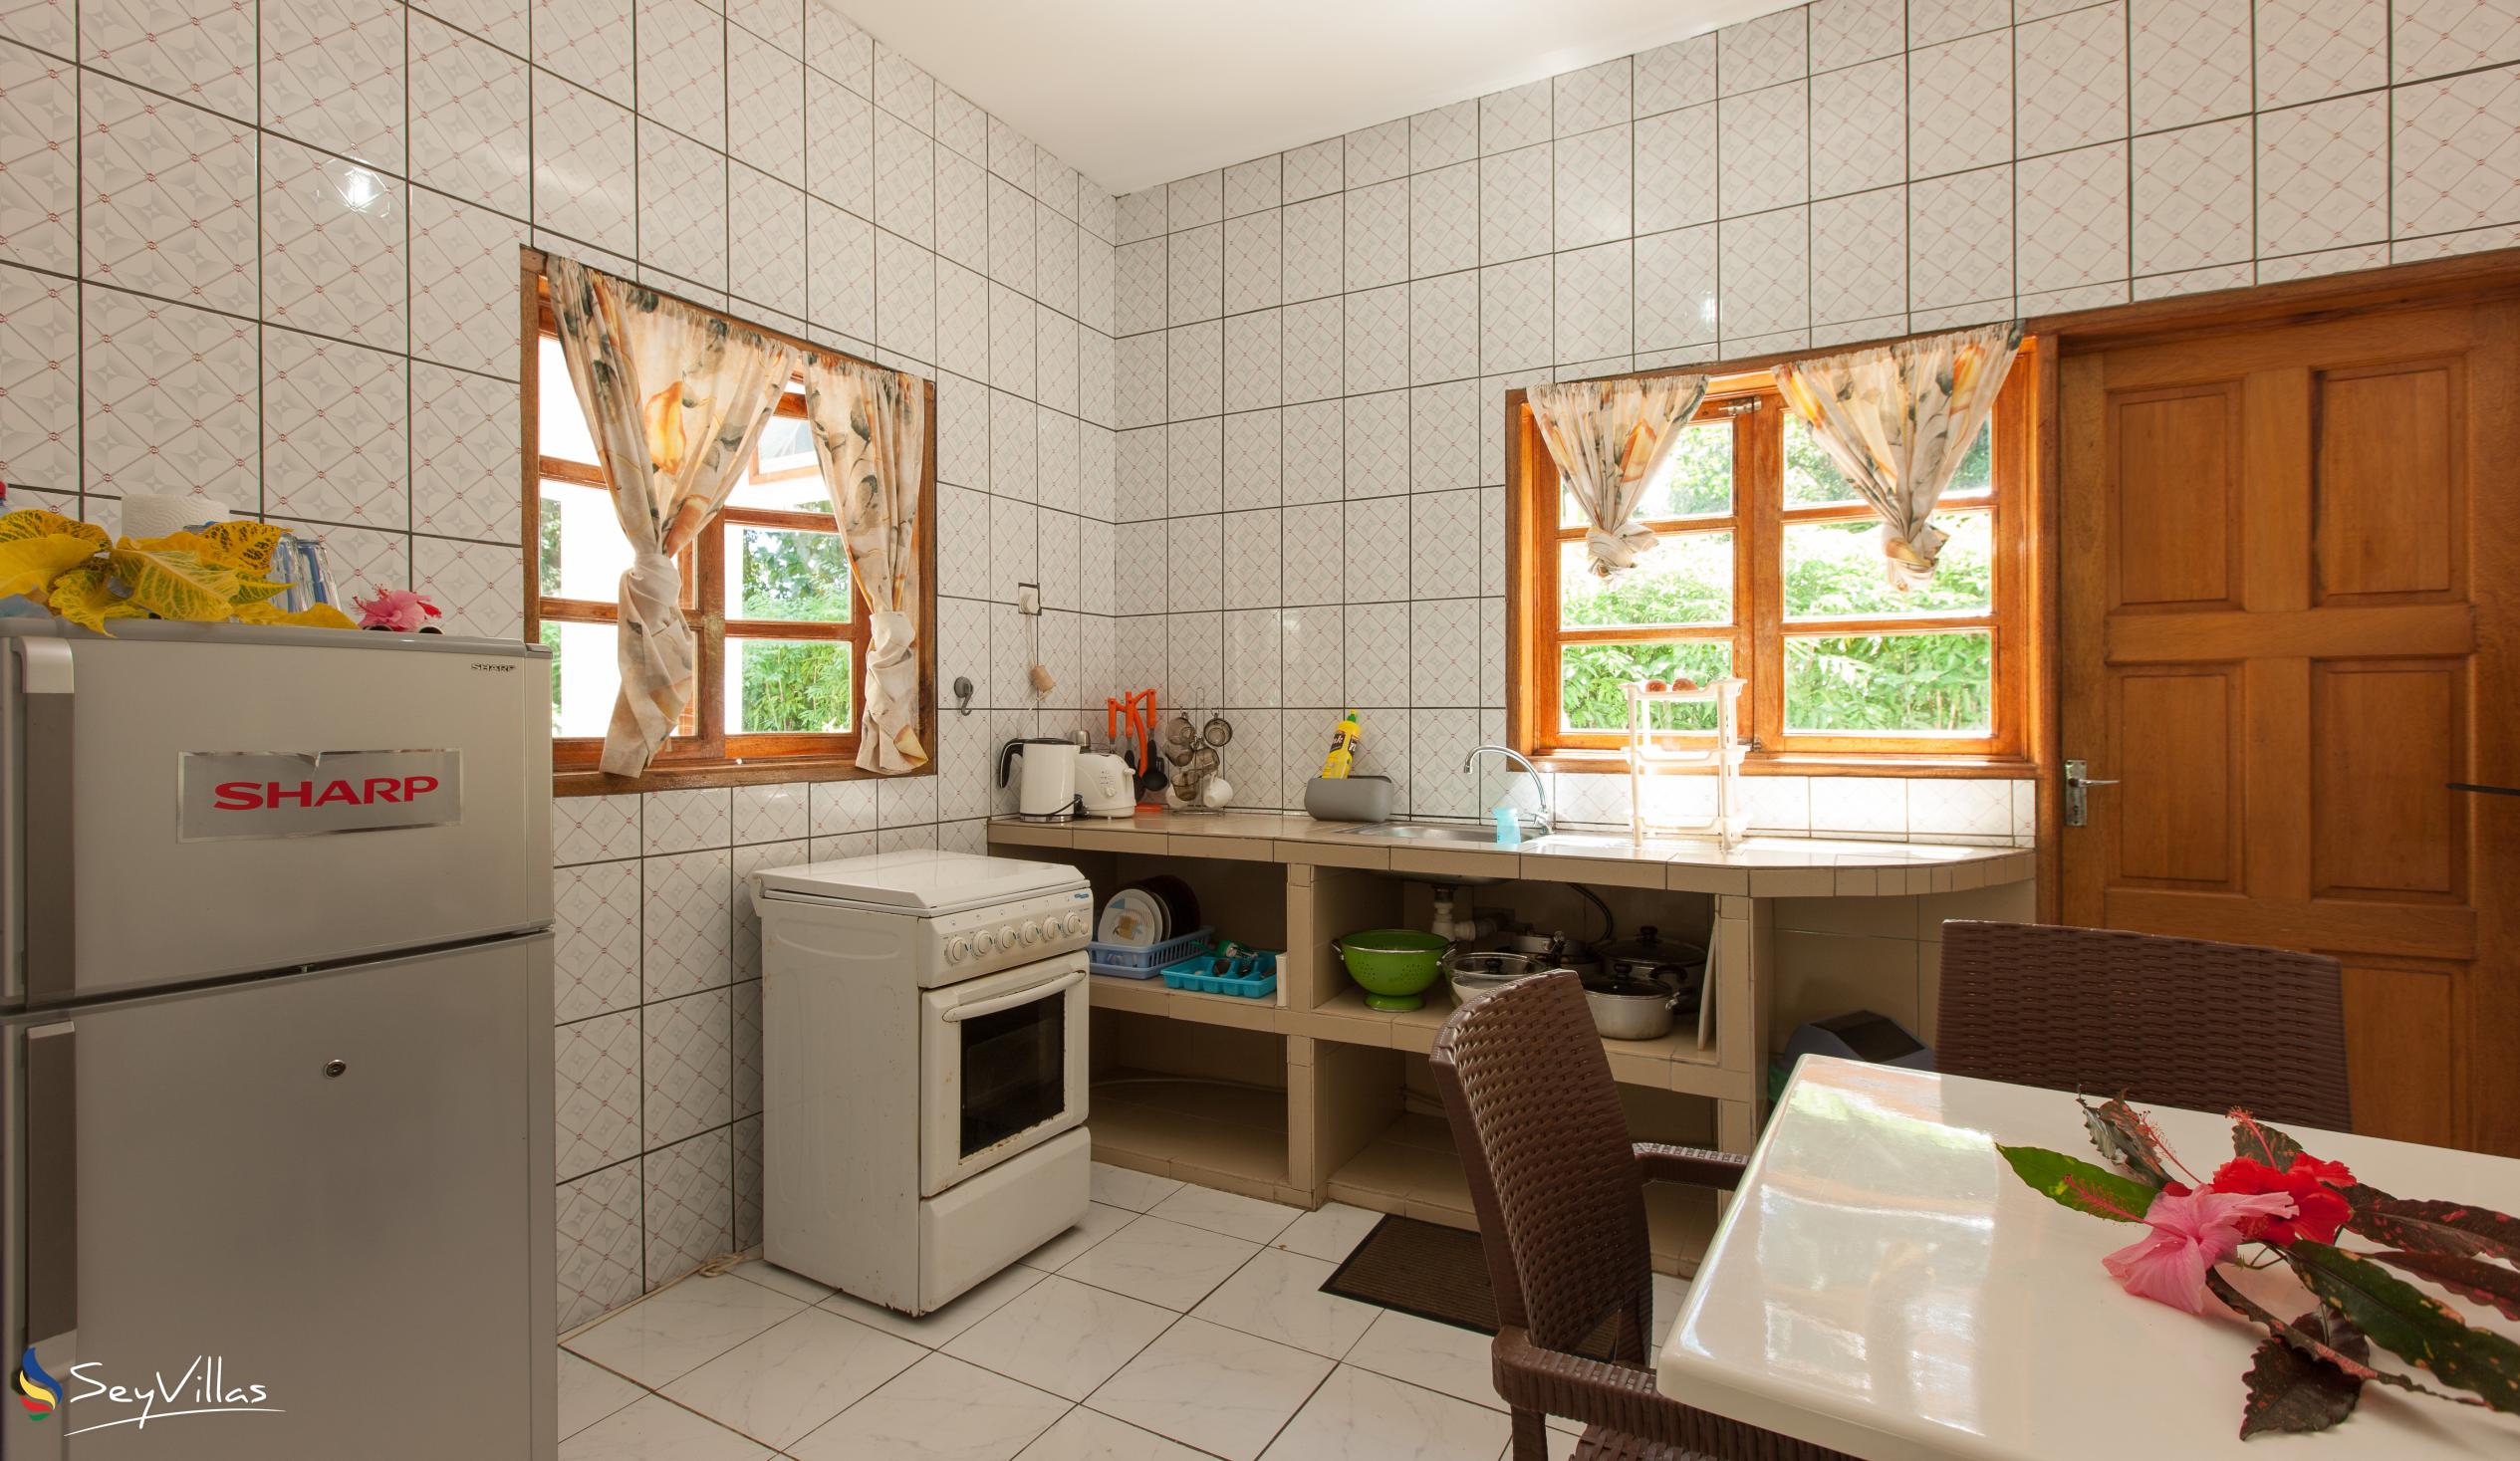 Foto 37: Tannette's Villa - Innenbereich - La Digue (Seychellen)